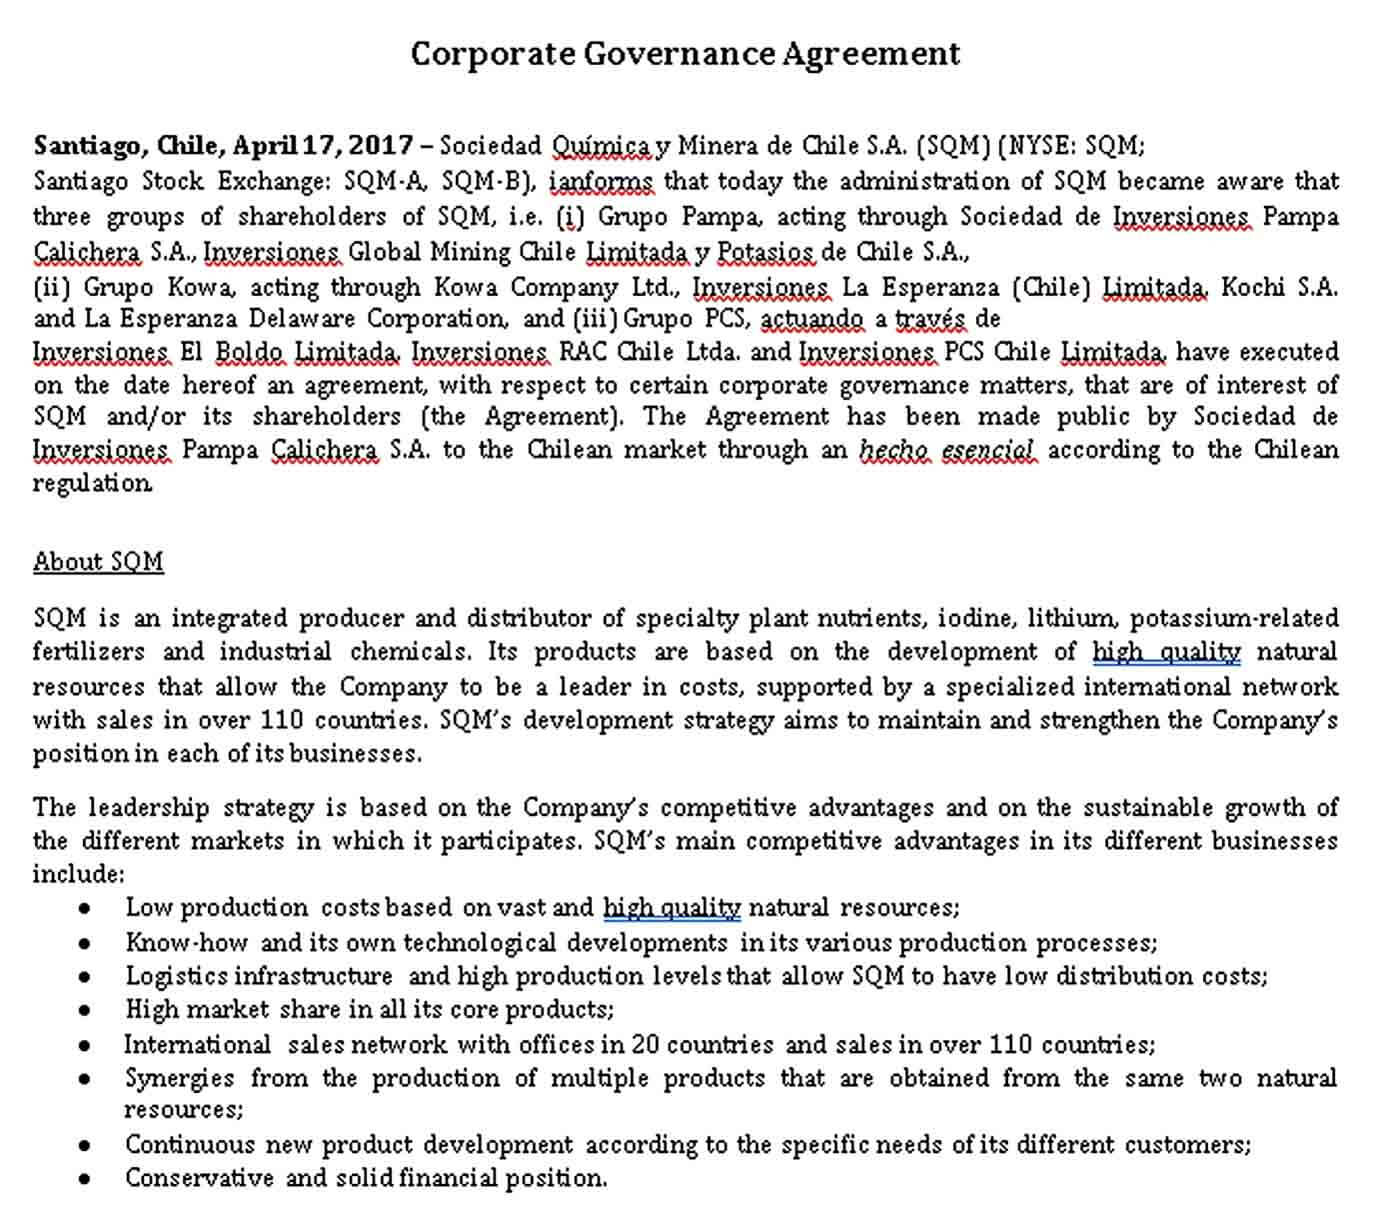 Sample Corporate Governance Agreement